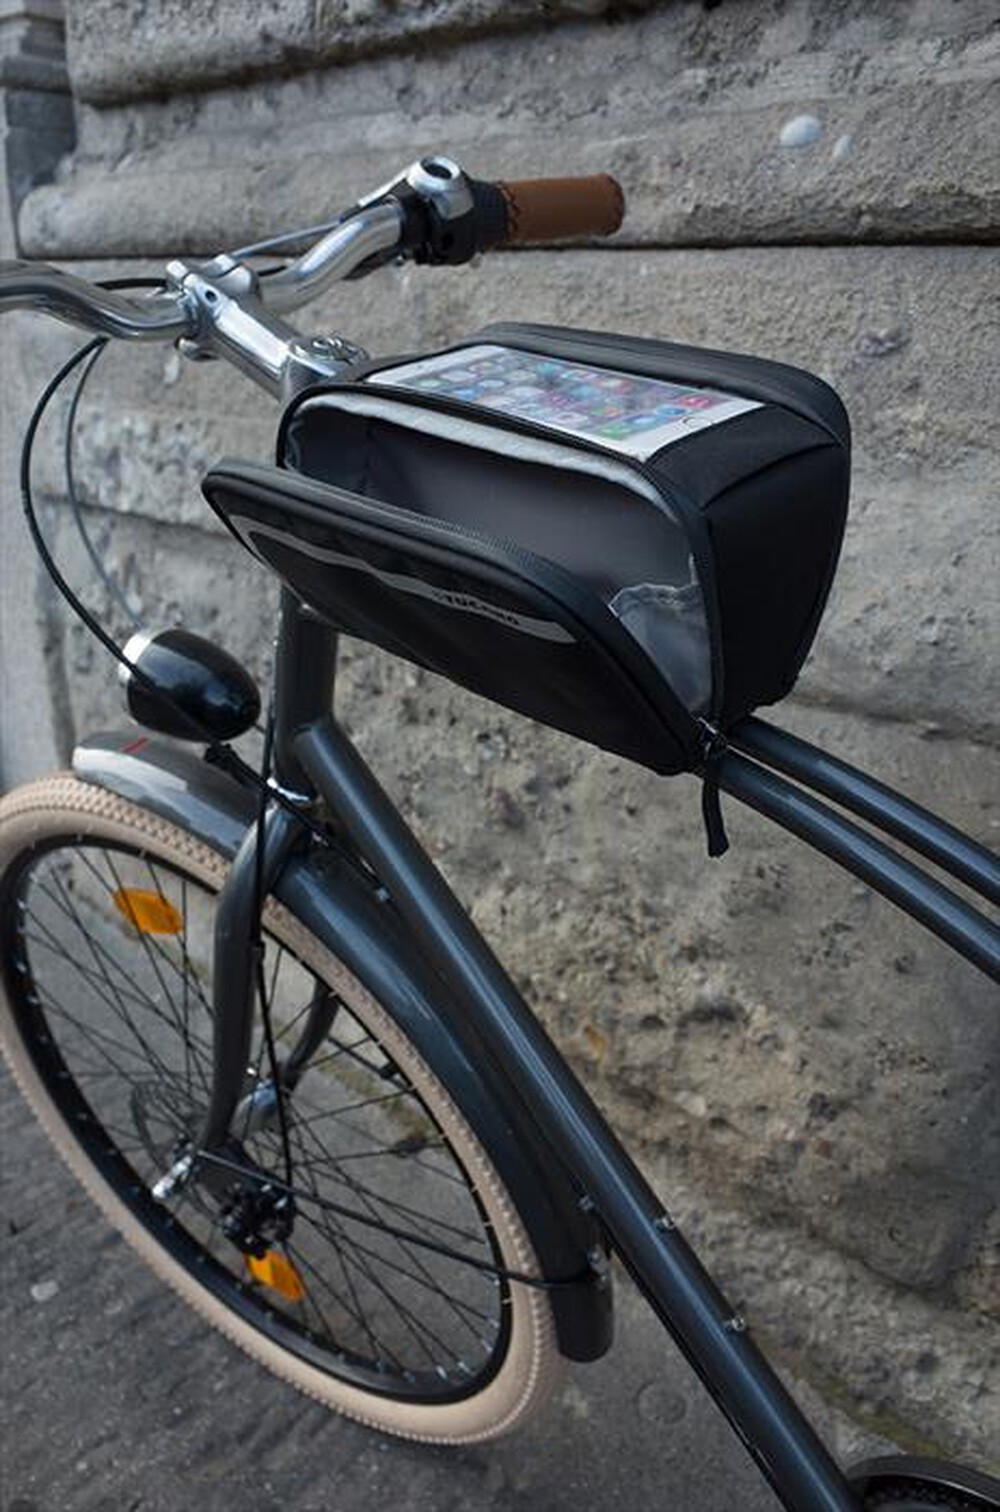 "TUCANO - Bike Mount - Borsa telaio bici smartphone fino 6\"-Nero"